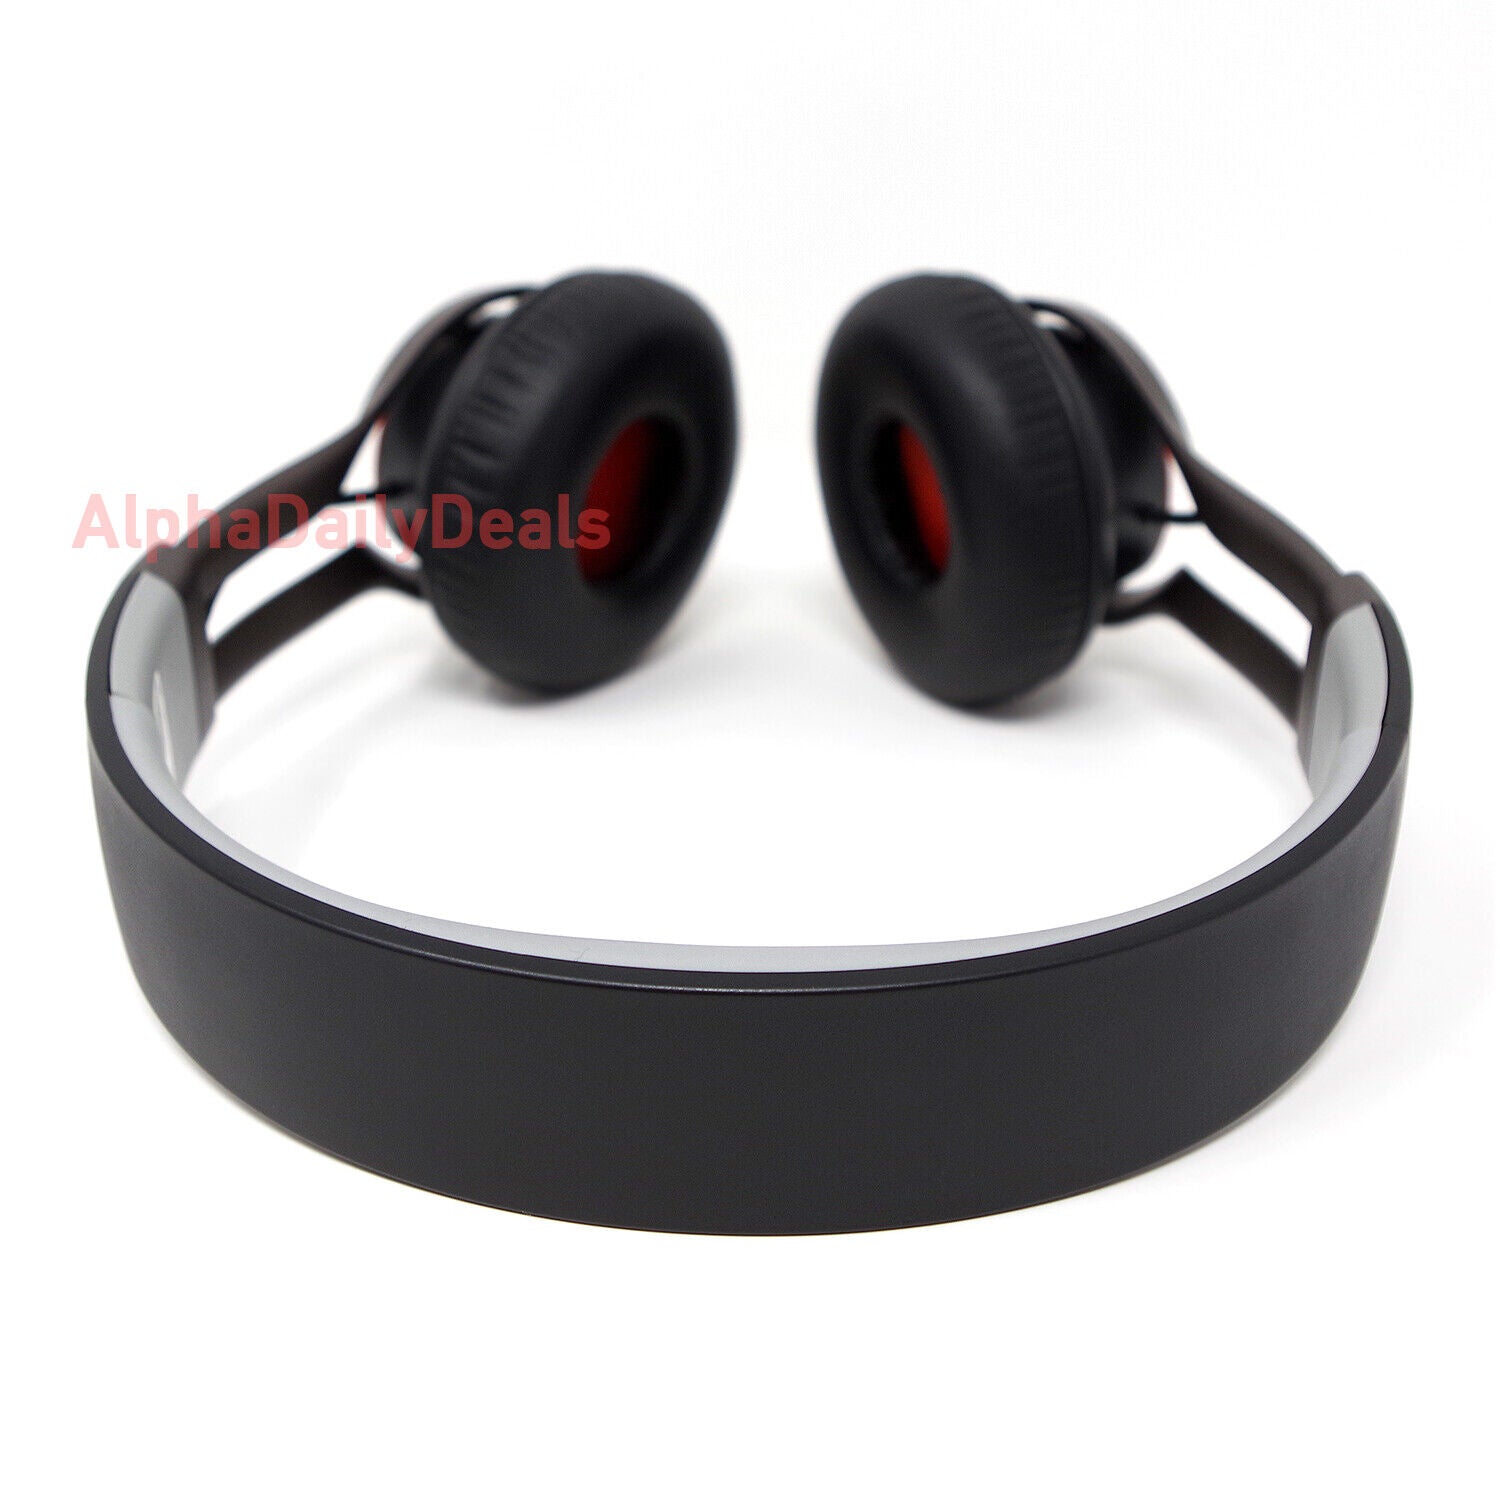 Jabra Revo Wireless Bluetooth On Ear Headphones Headset with Mic Black